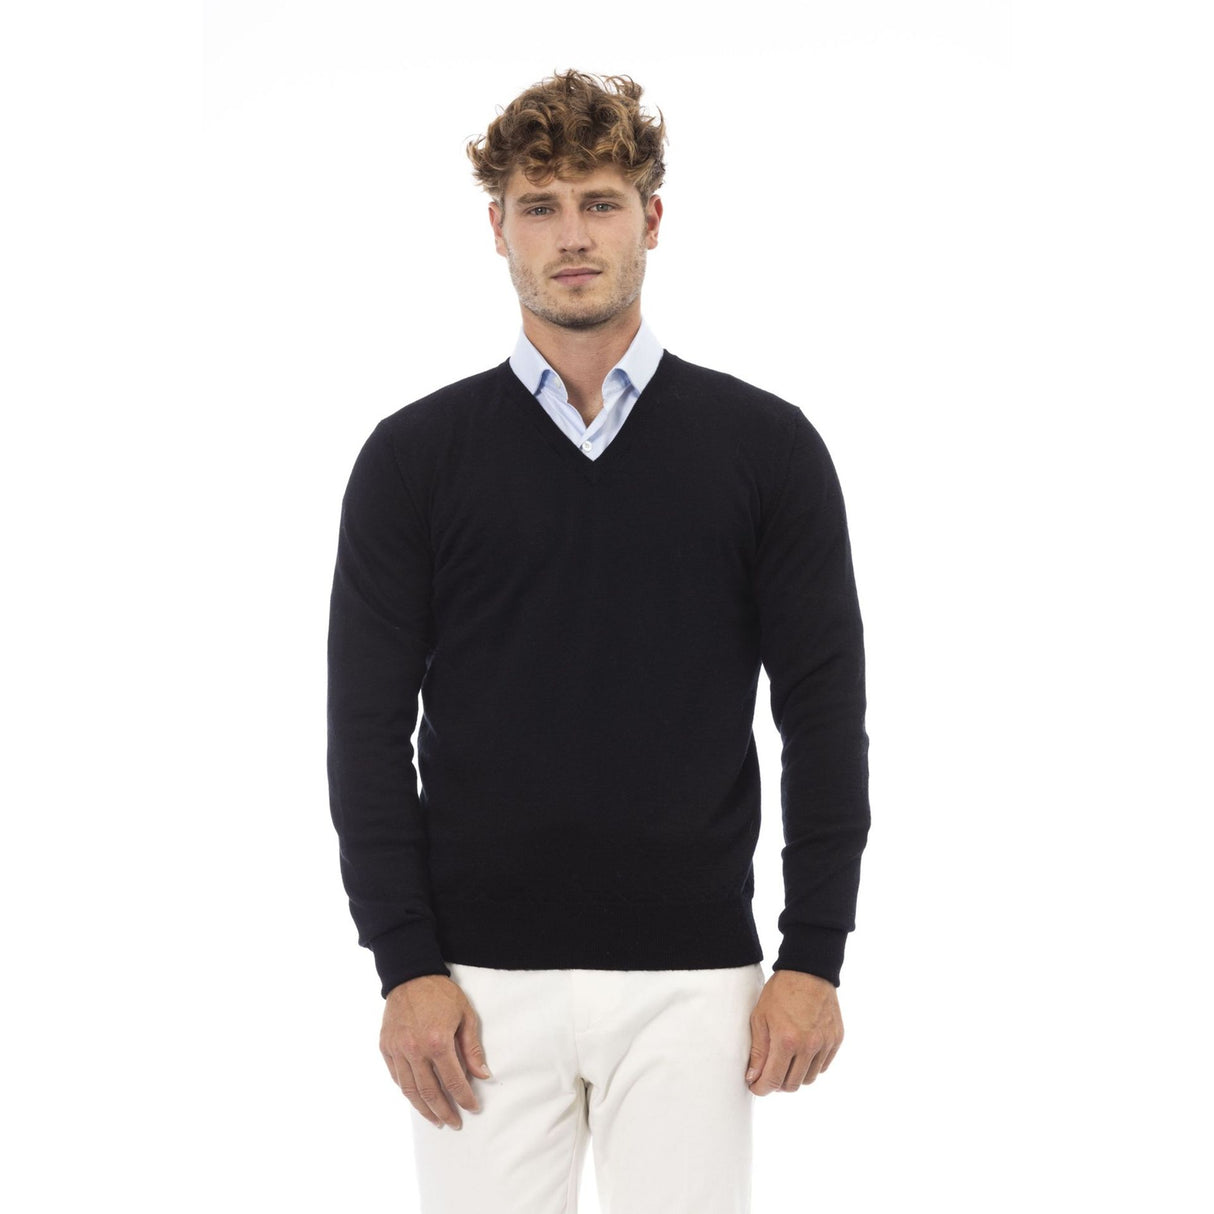 Men's sweater V-neck sweater Fall/Winter sweater Long sleeve sweater Italian-made sweater Warm sweater Comfortable sweater Breathable sweater (depending on the wool percentage) Versatile sweater Regular fit sweater